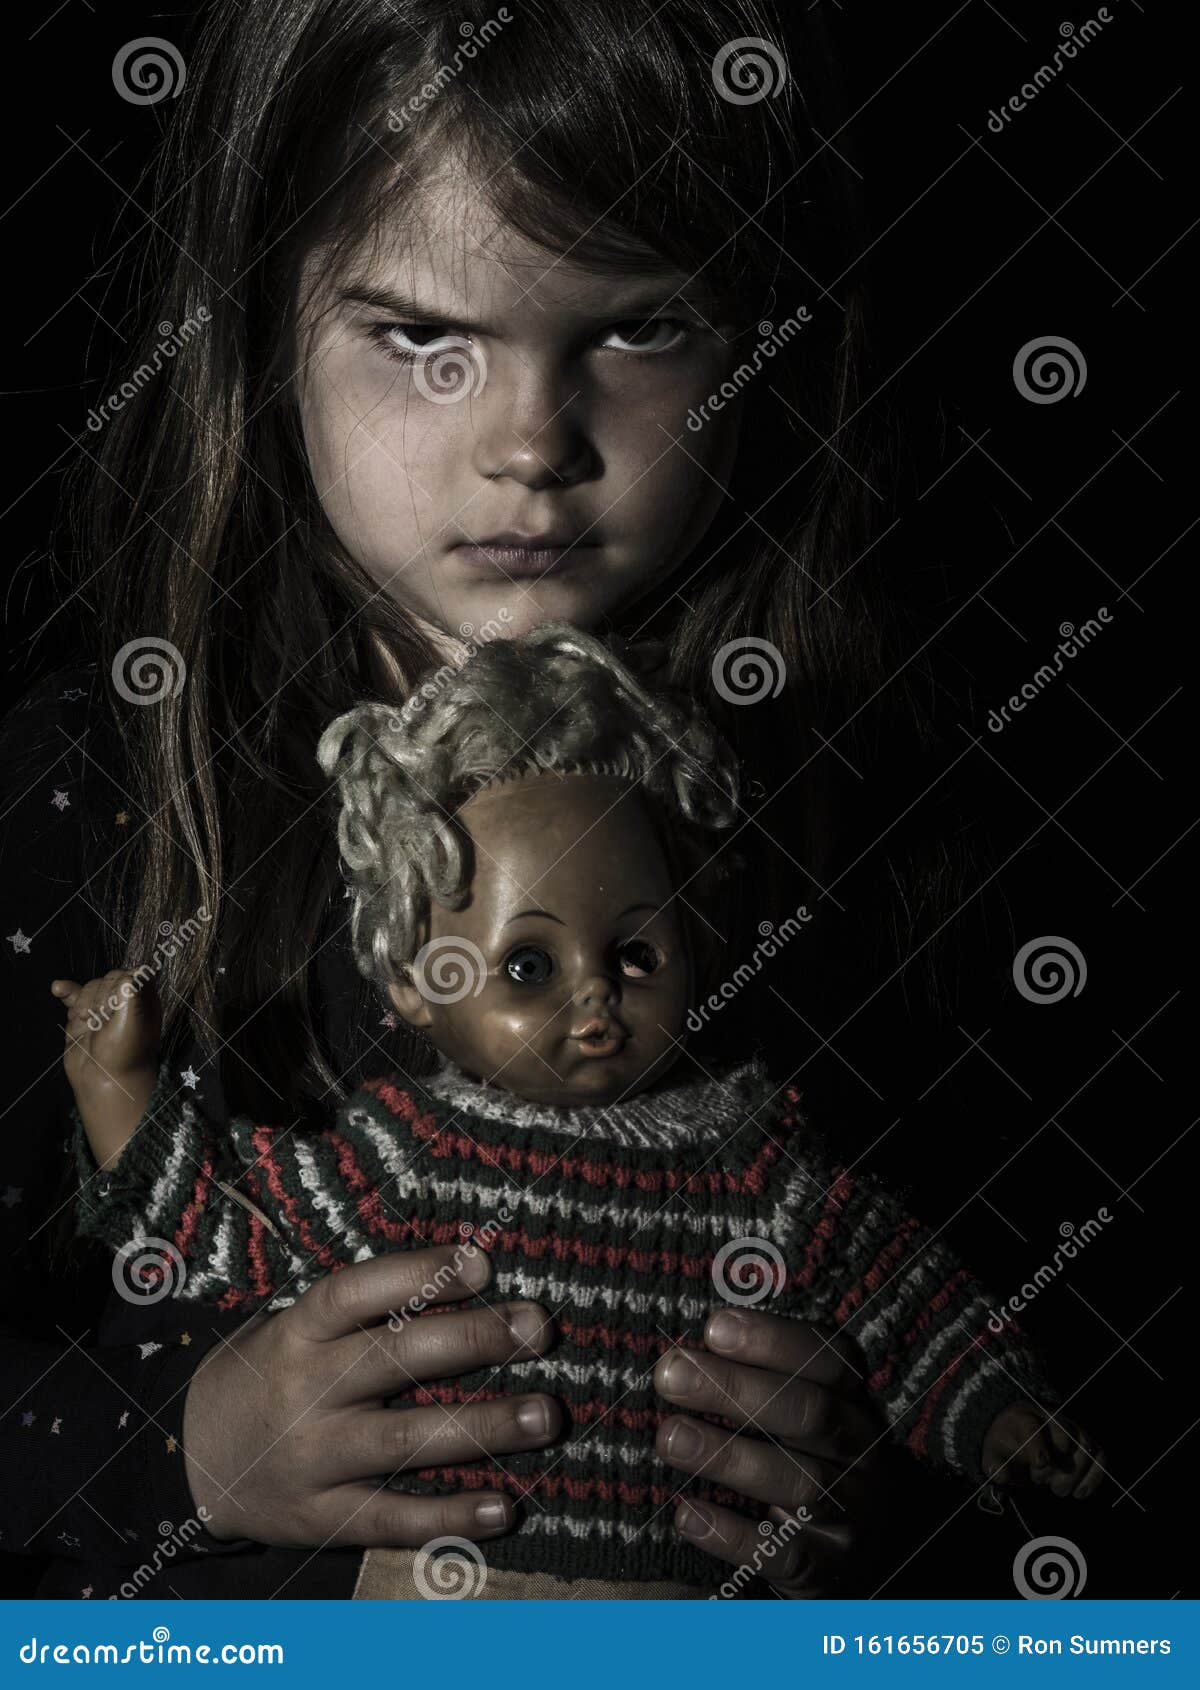 creepy girl dolls